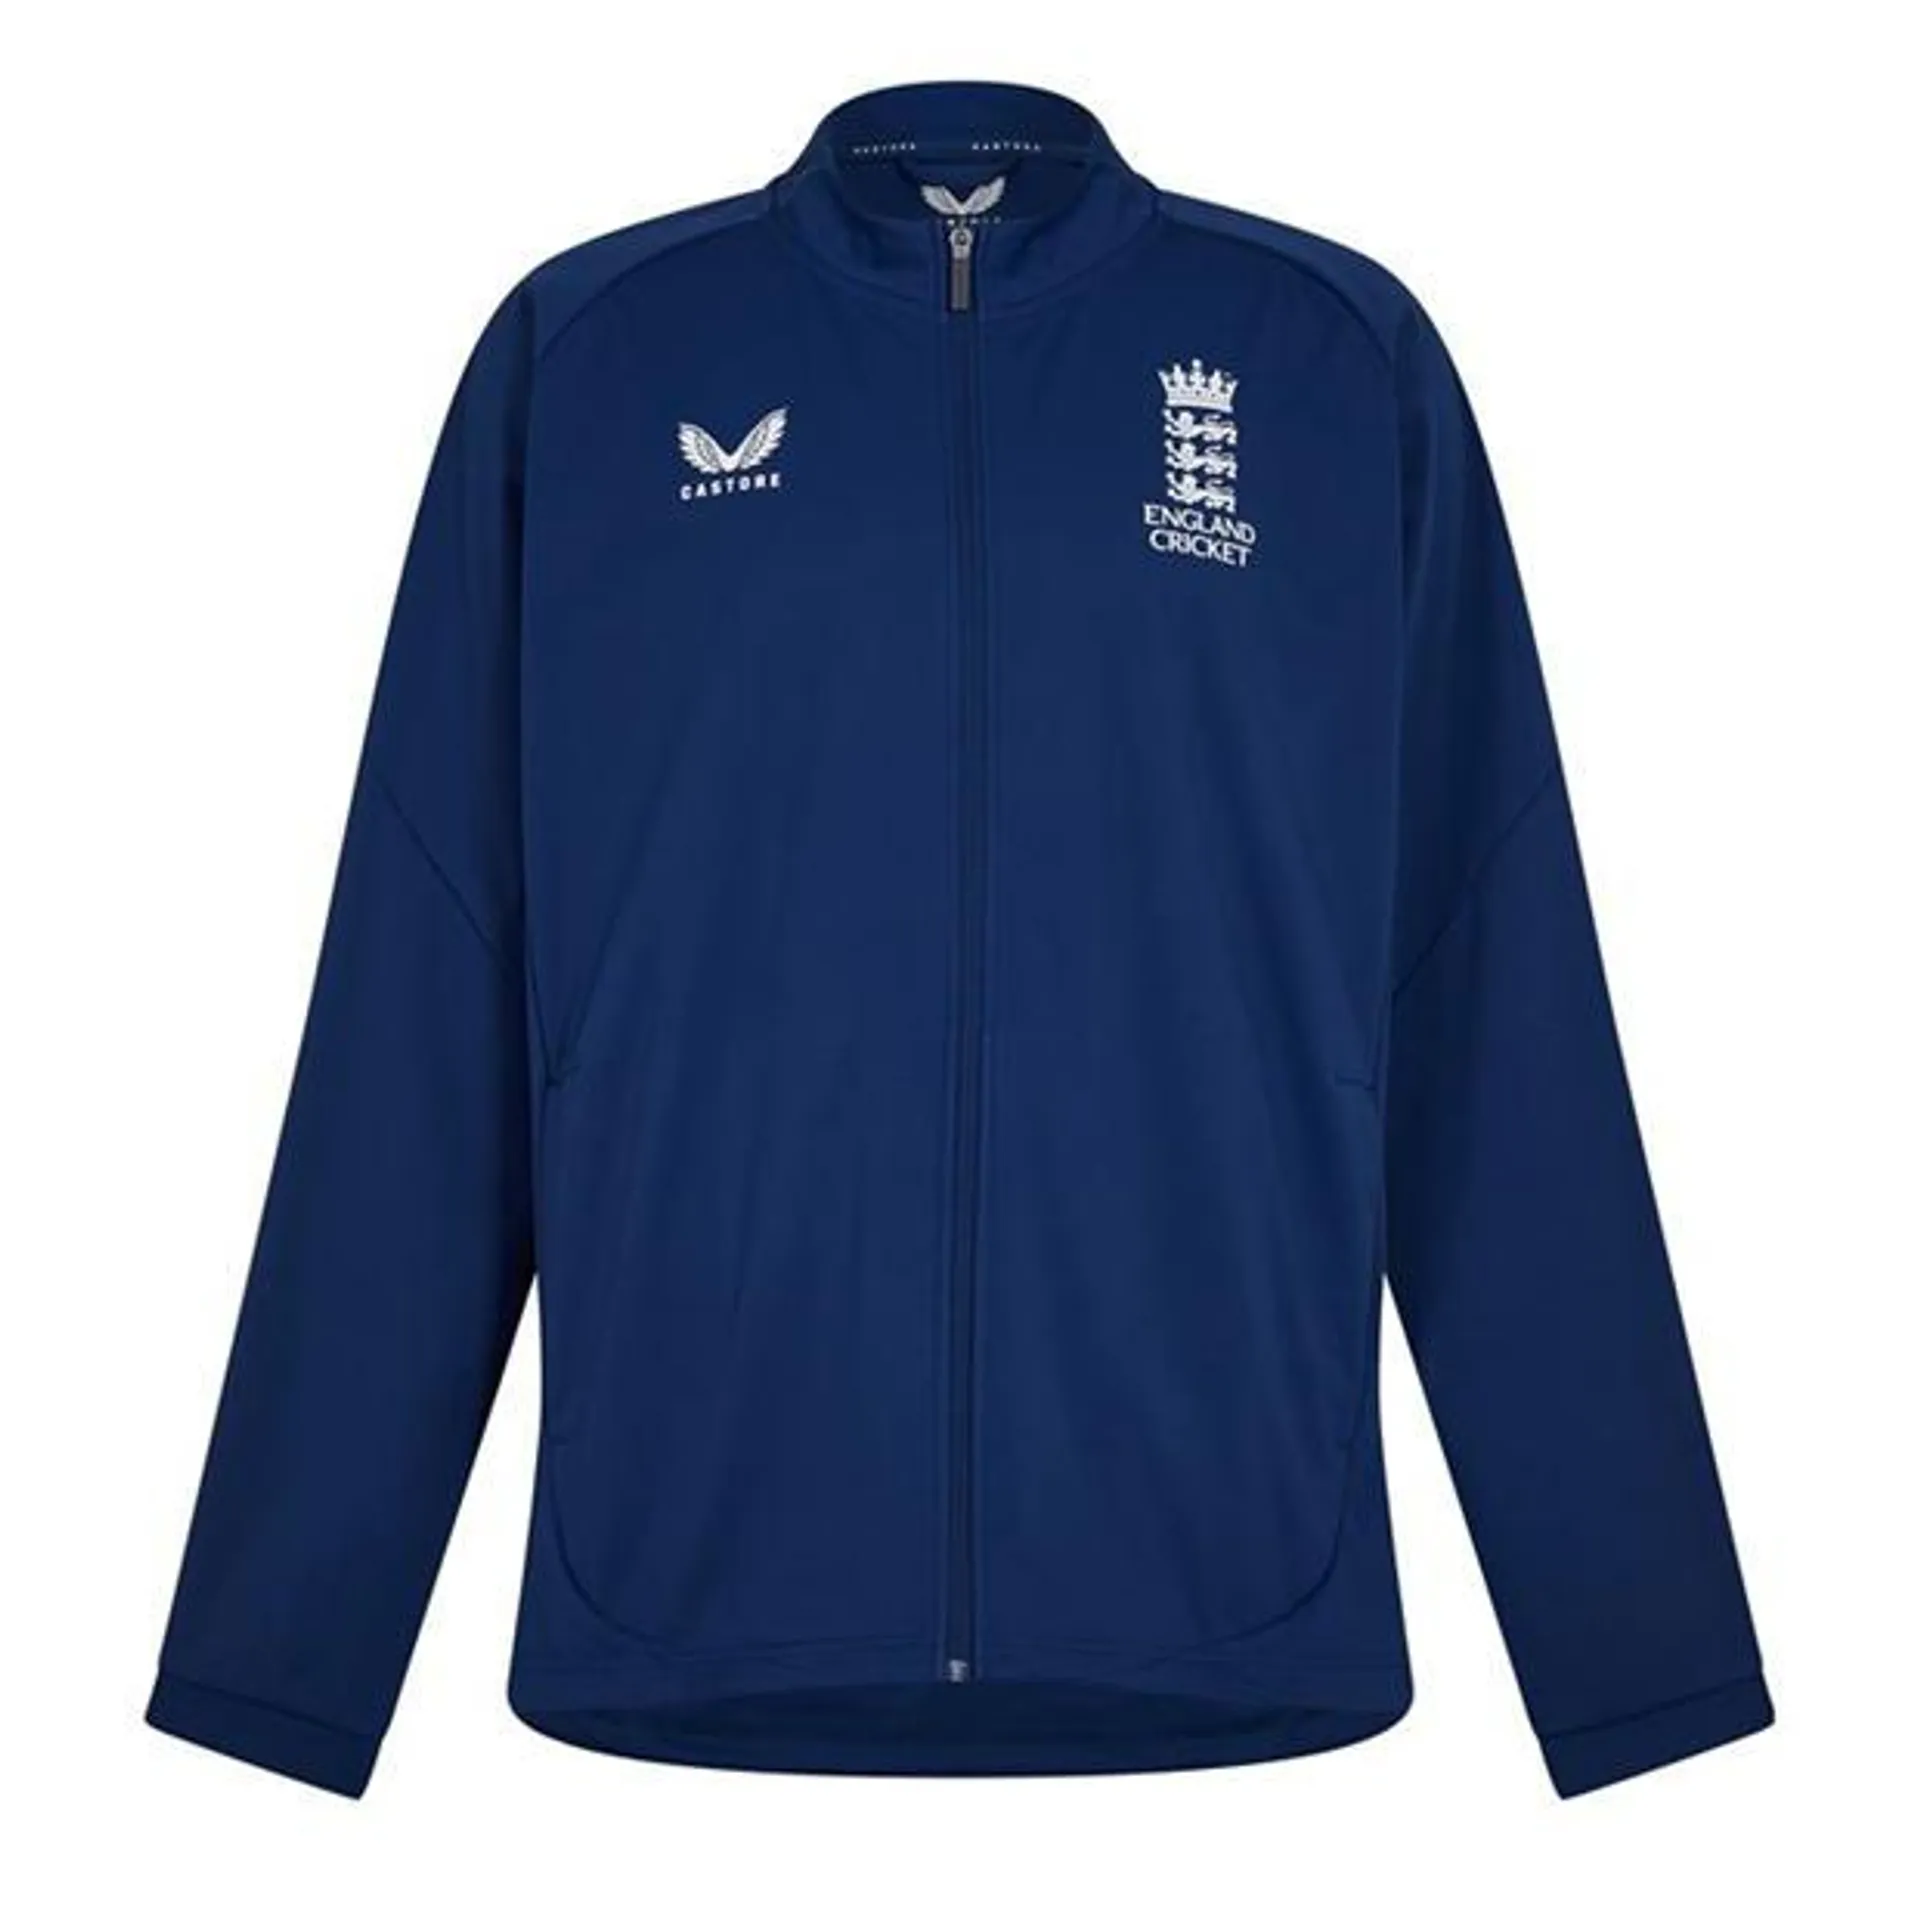 England Cricket Soft Shell Jacket